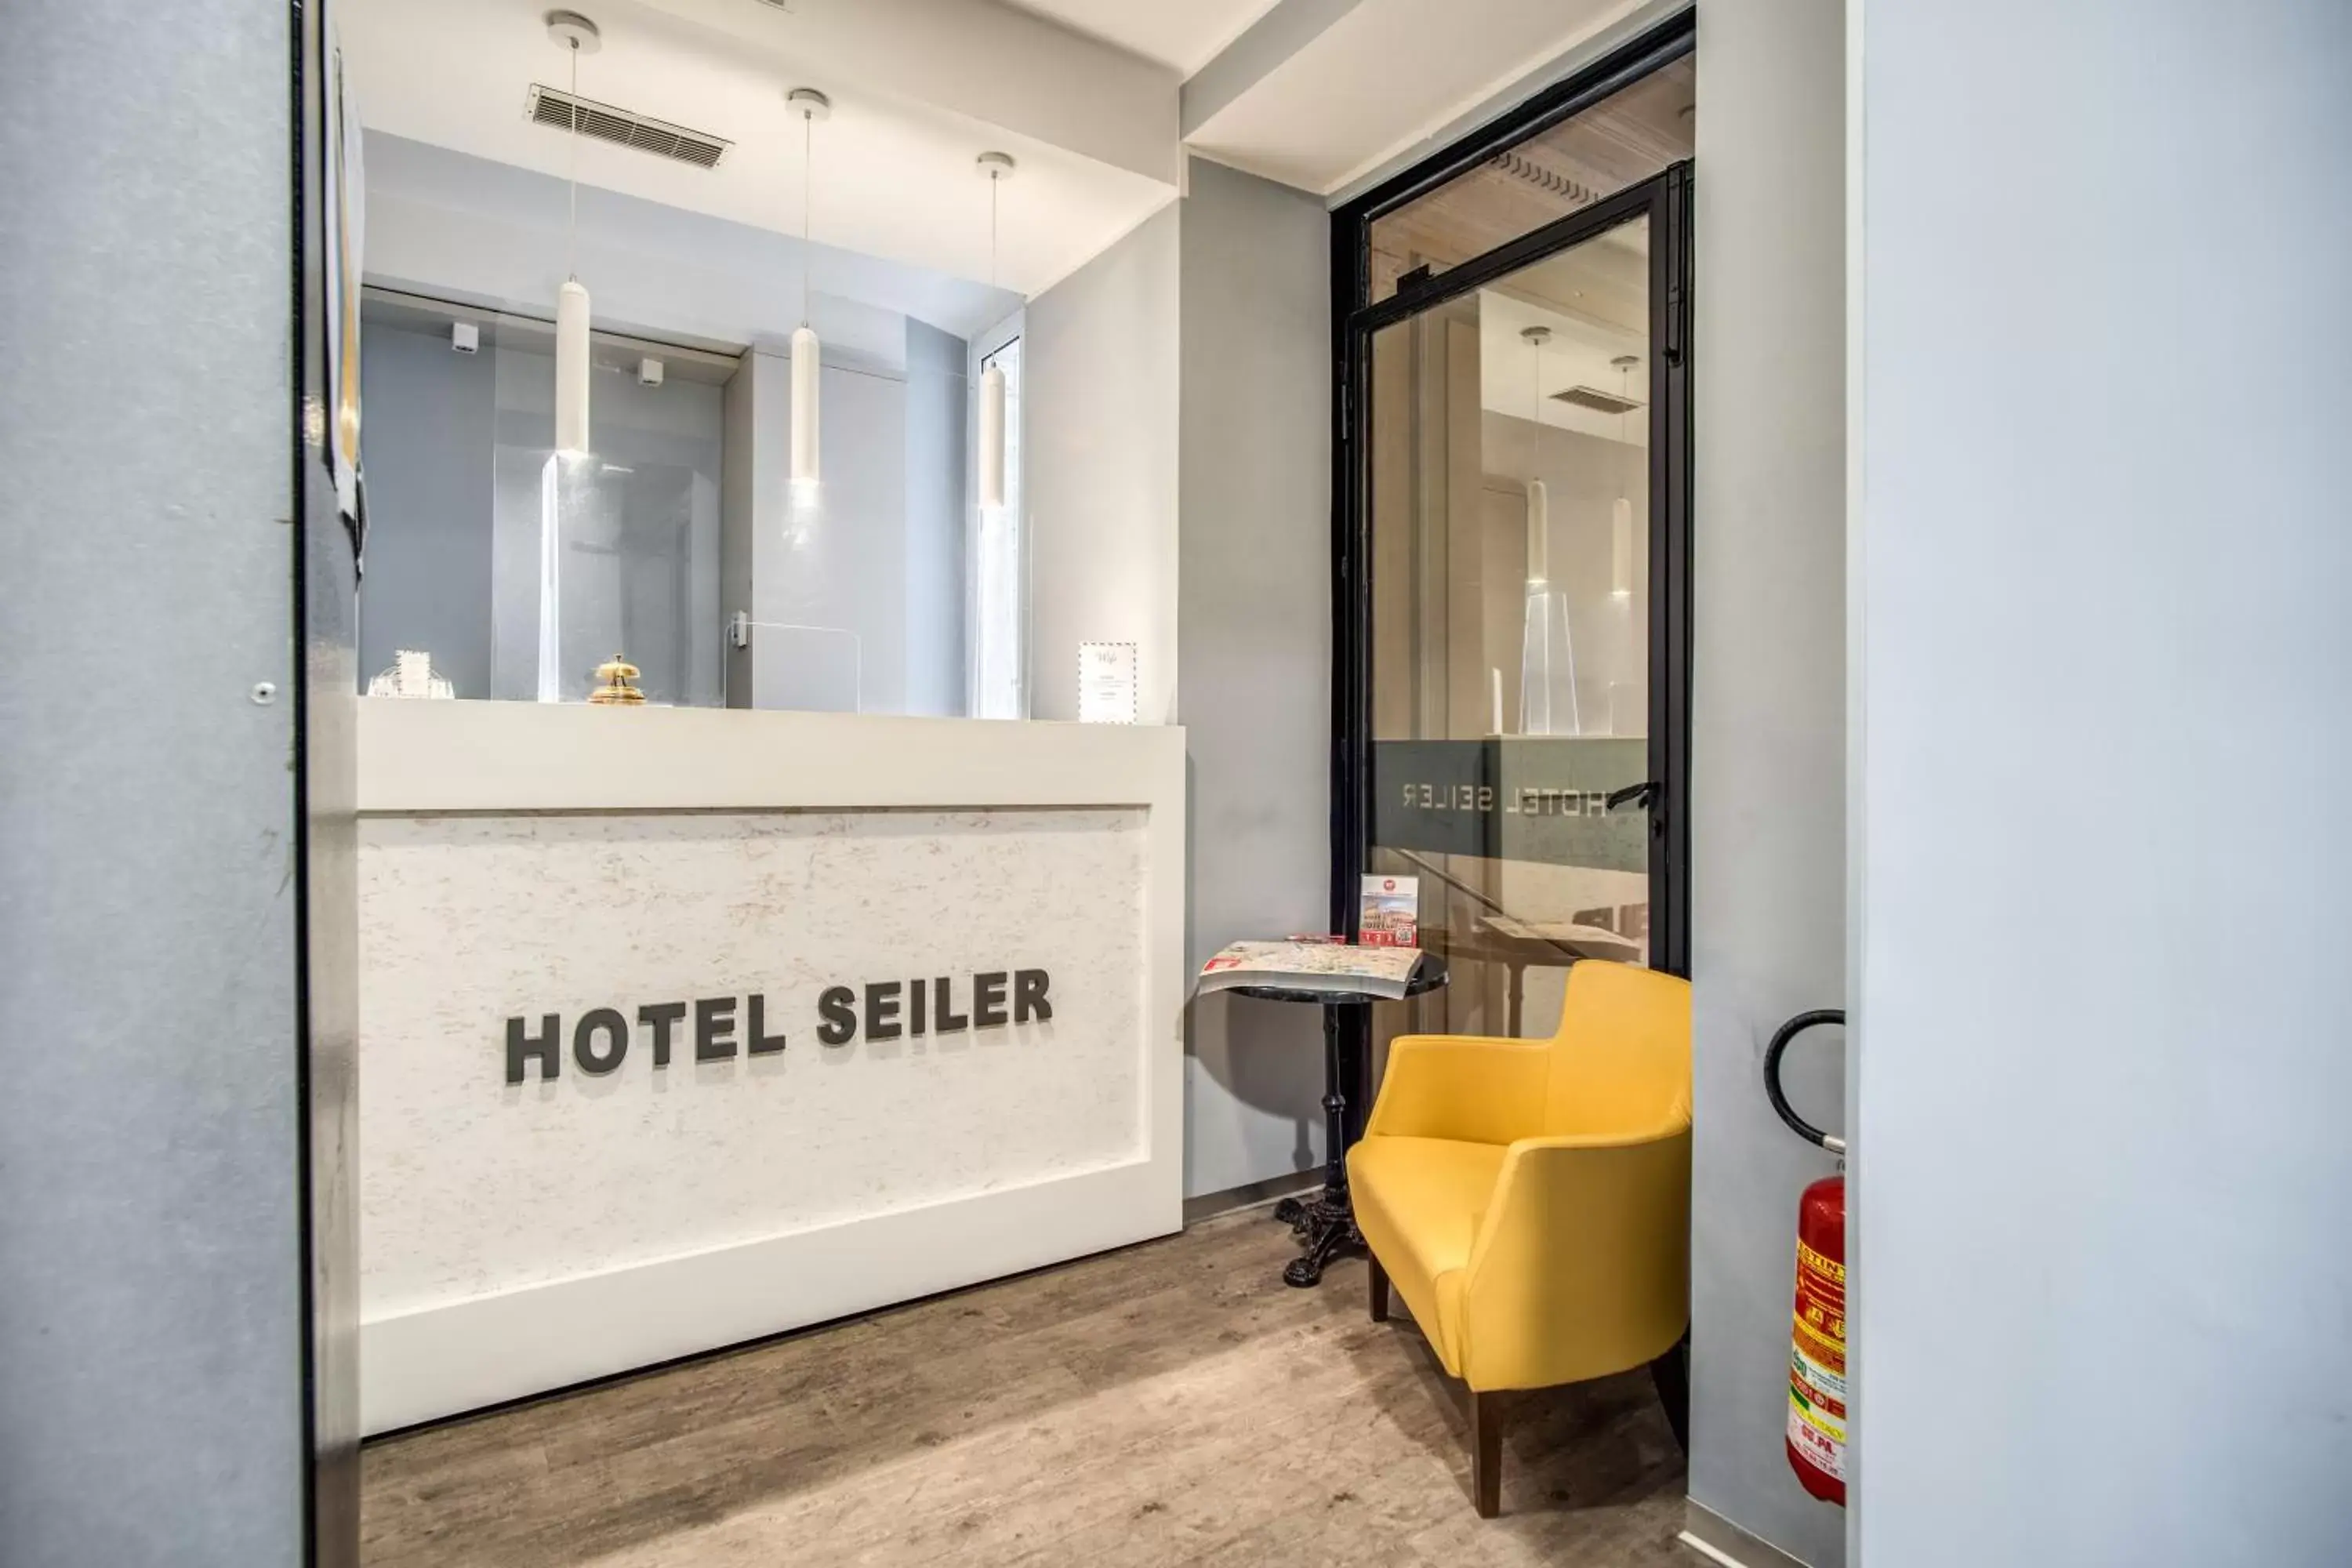 Lobby or reception in Hotel Seiler